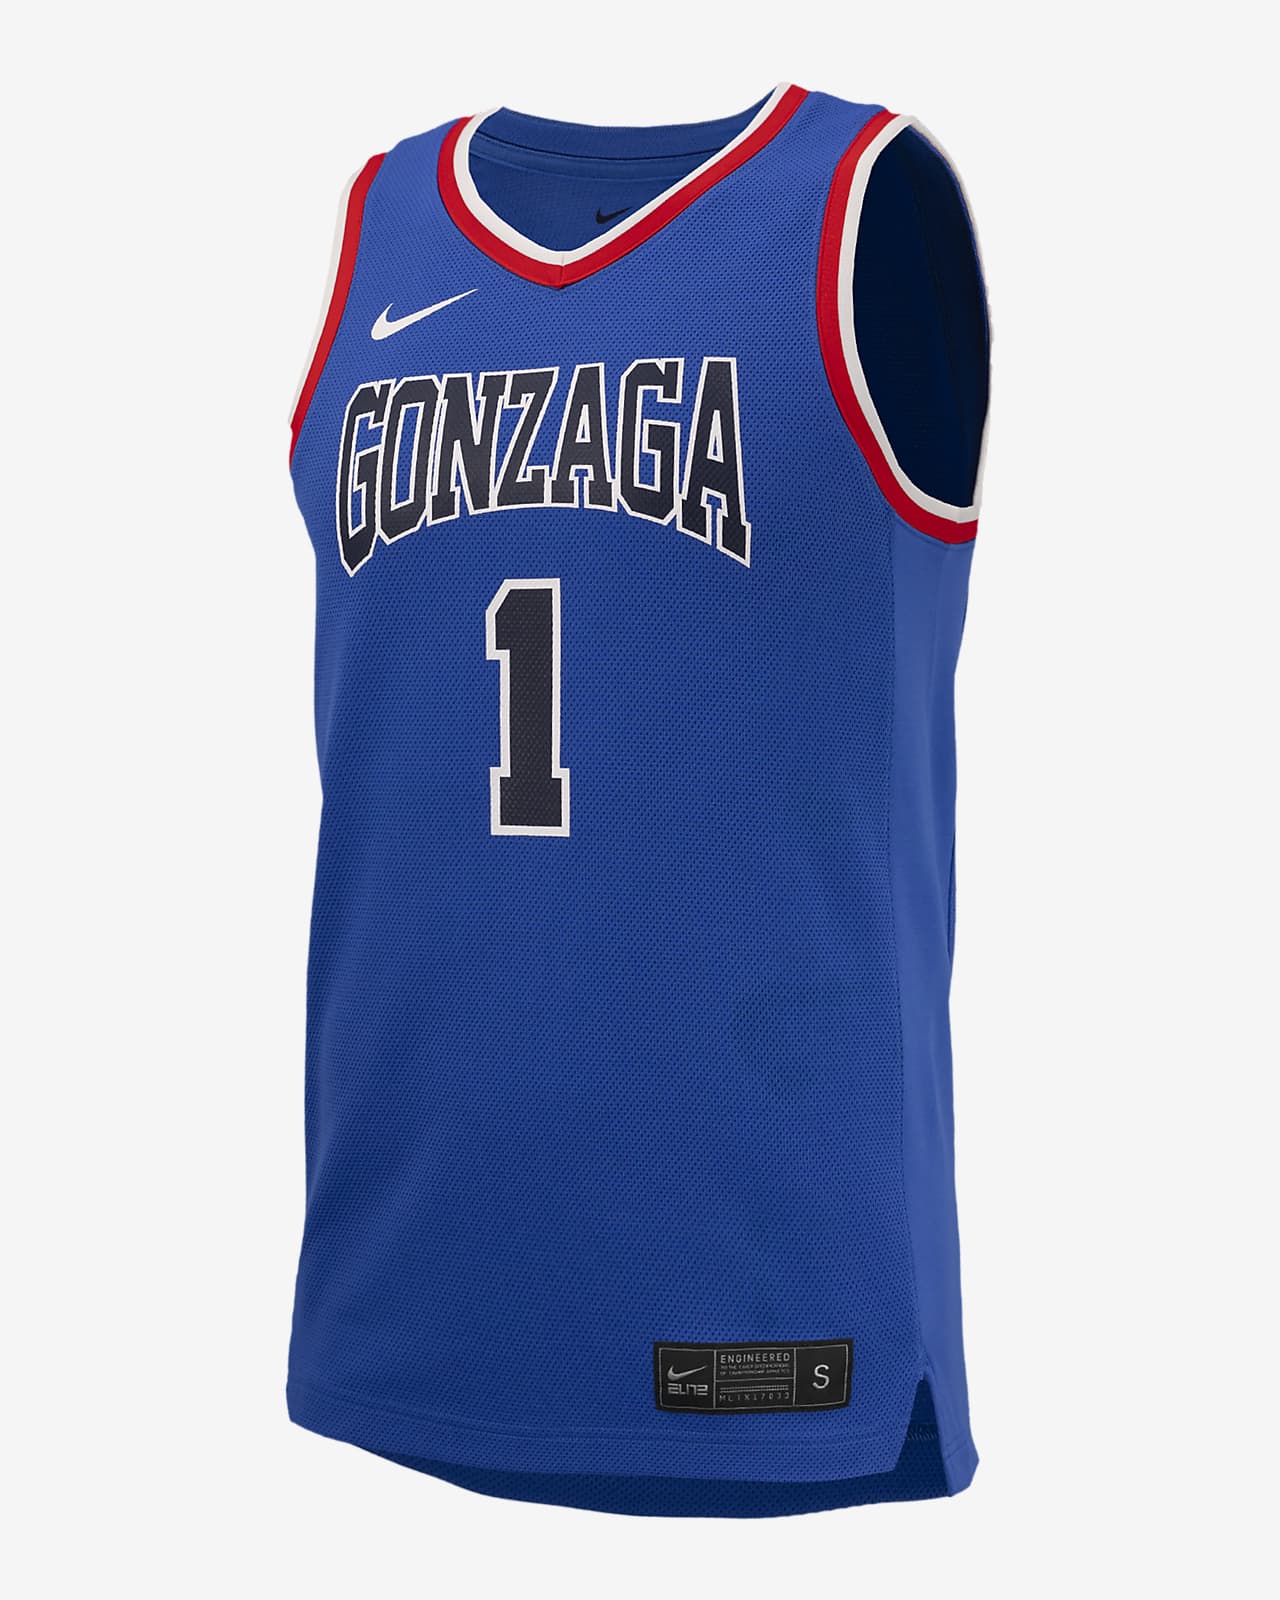 Gonzaga Men's Nike College Basketball Replica Jersey